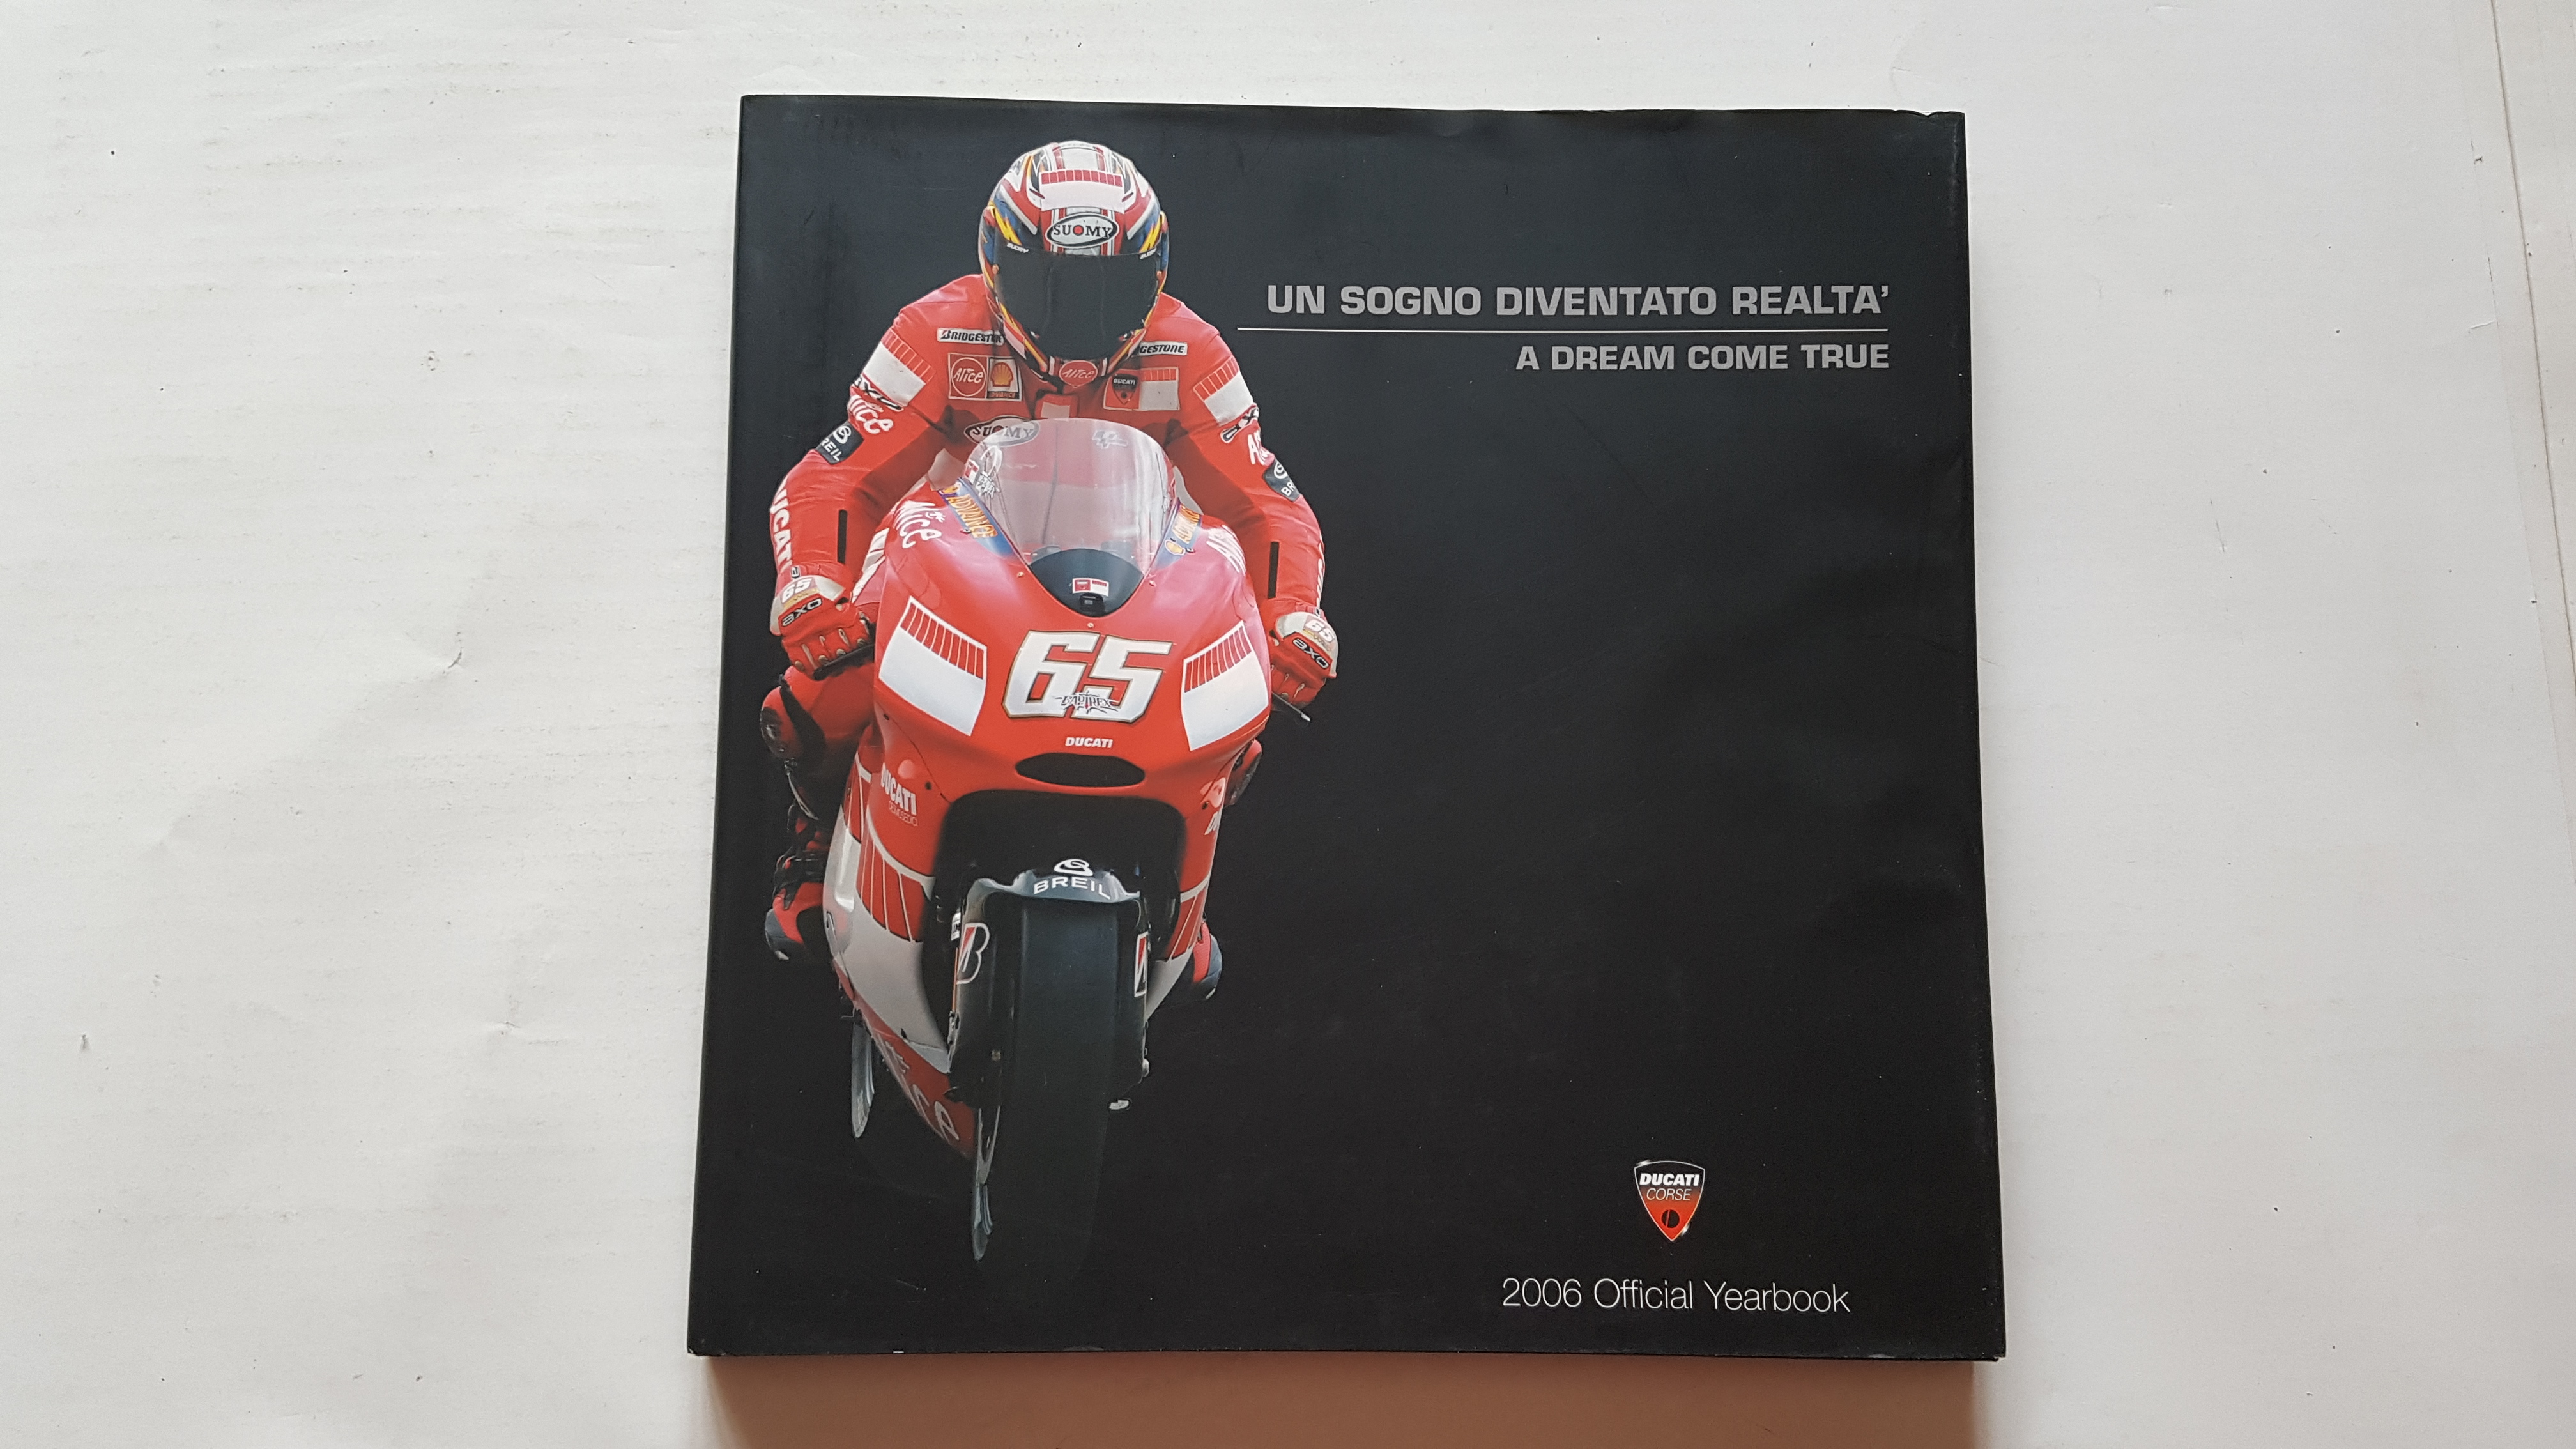 Ducati Corse annuario official yearbook 2006 Capirossi - no manuale depliant